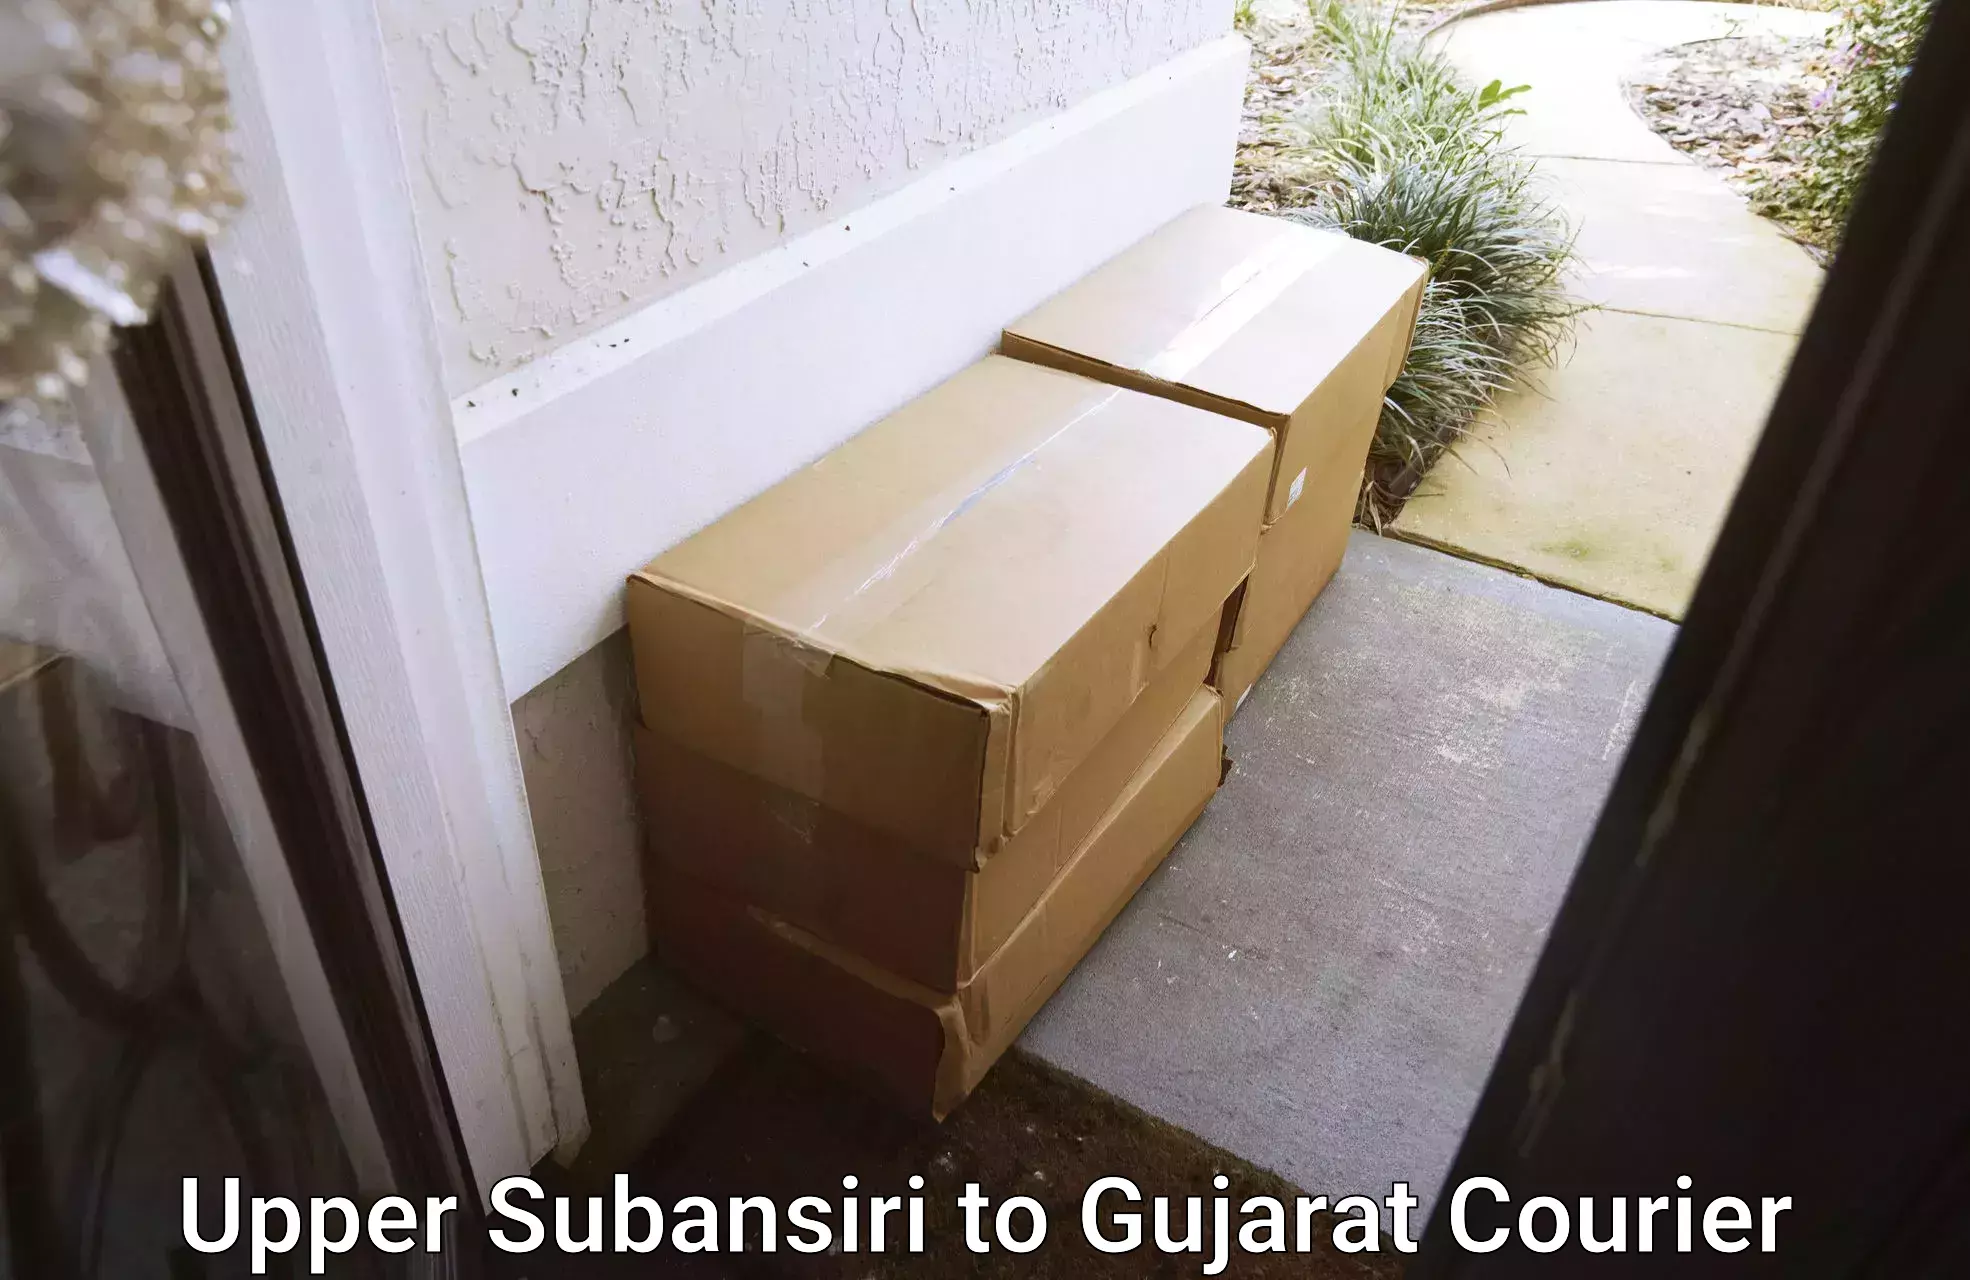 Courier service partnerships Upper Subansiri to Gujarat